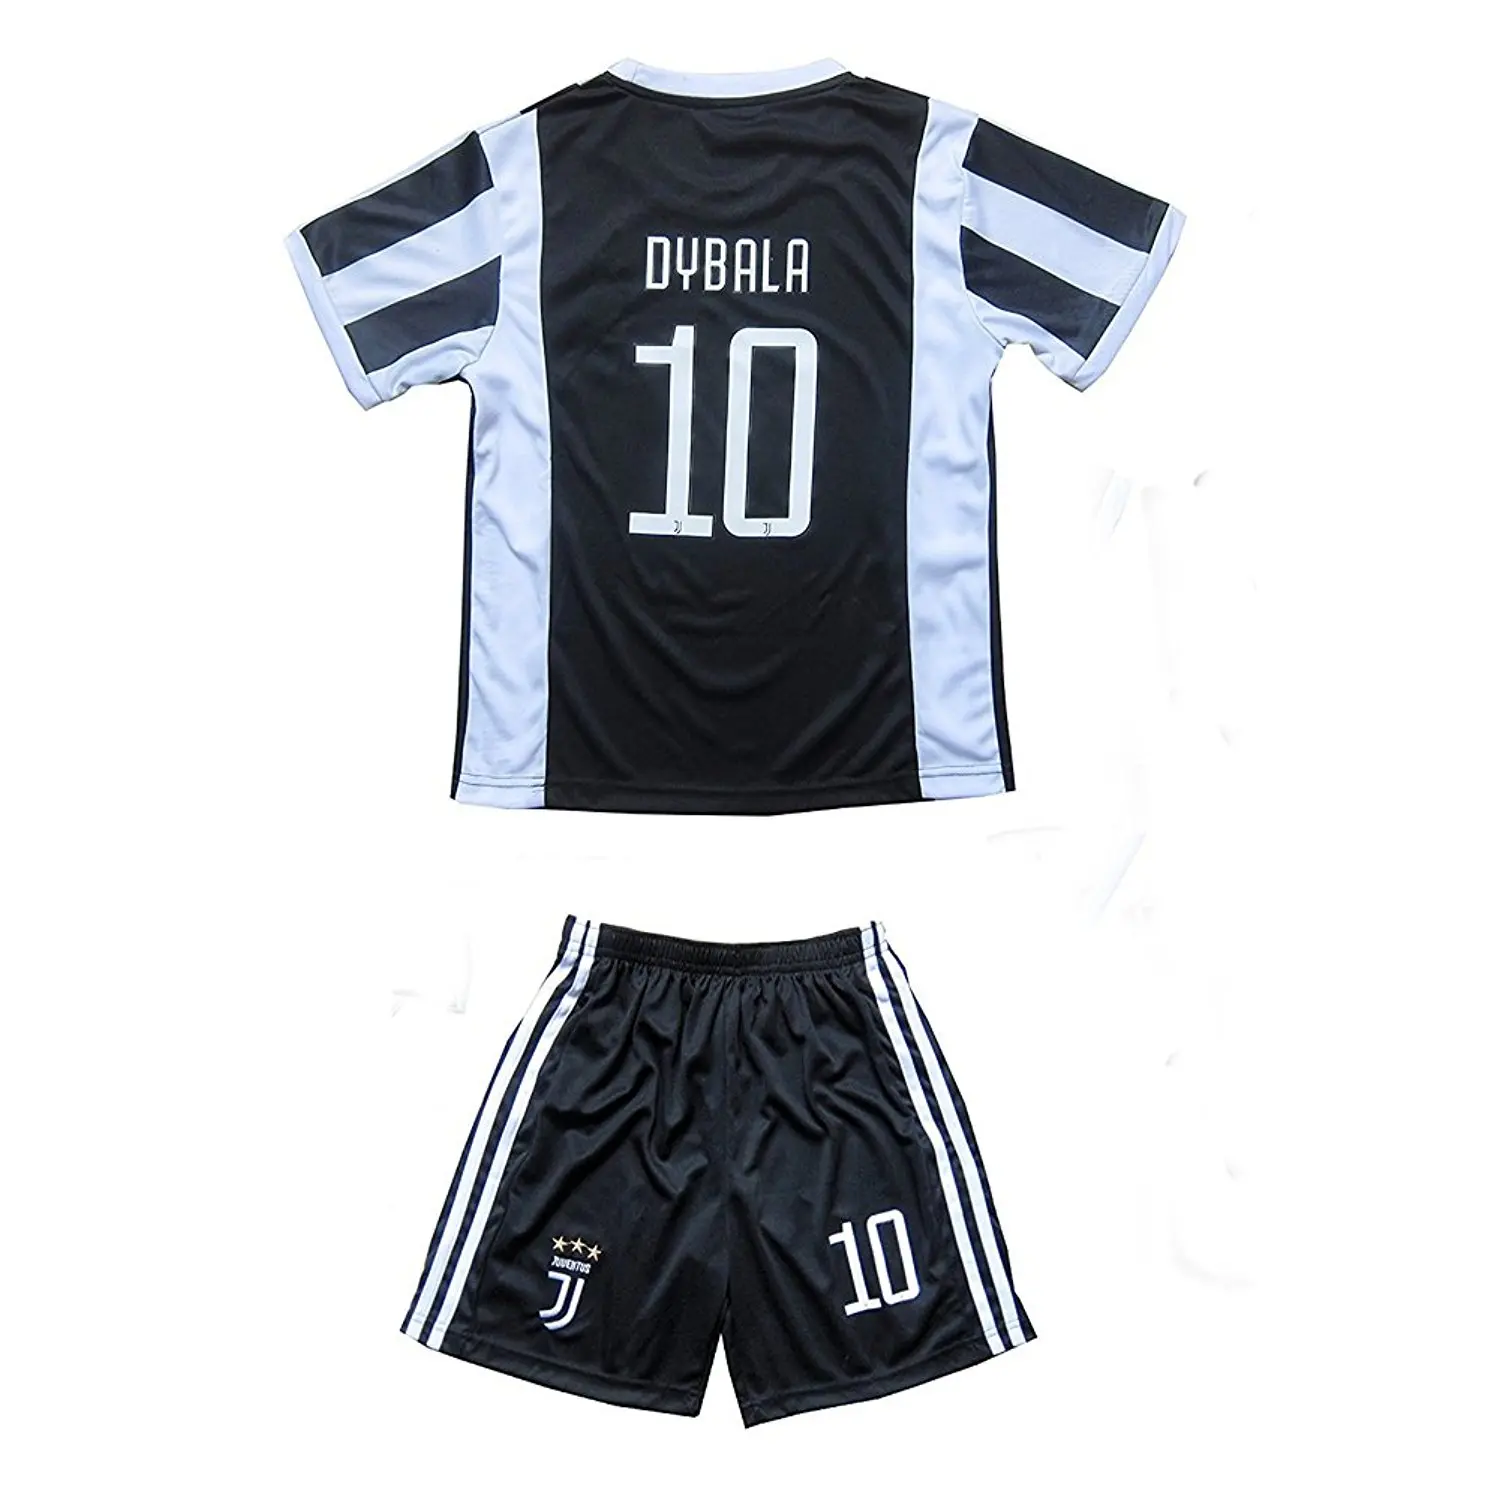 Dybala Juventus Home Youth Soccer Jersey /& Shorts /& Kit Bag Great Gift for Kids Boys Girls Football Jersey Juve Dybala #10